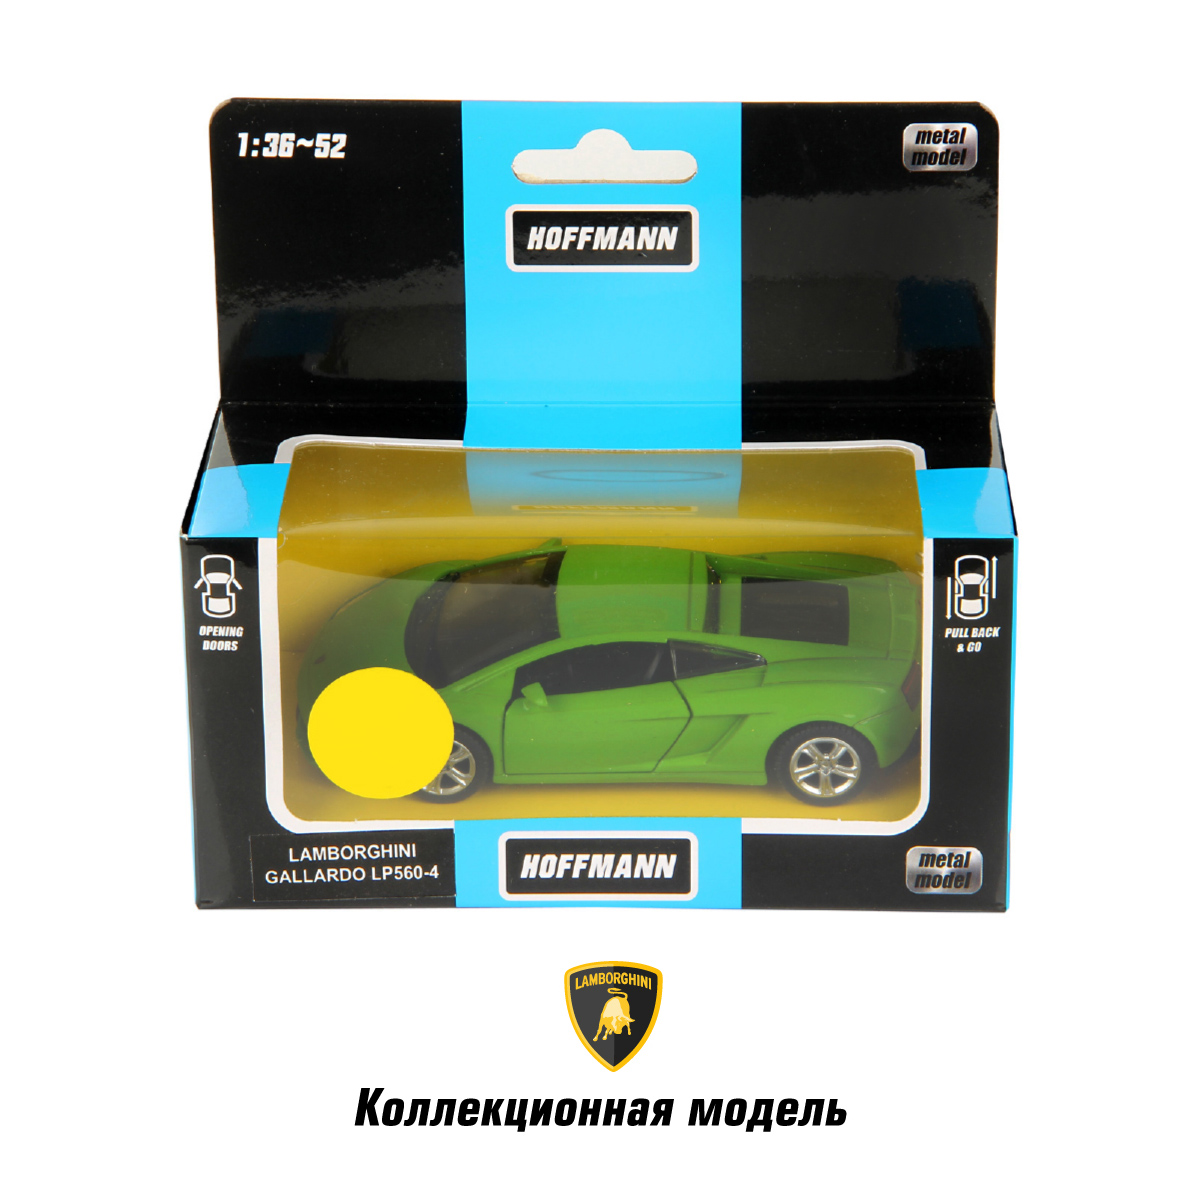 Машинка HOFFMANN 1:43 Lamborghini Gallardo LP560-4 металлическая 58018 - фото 5